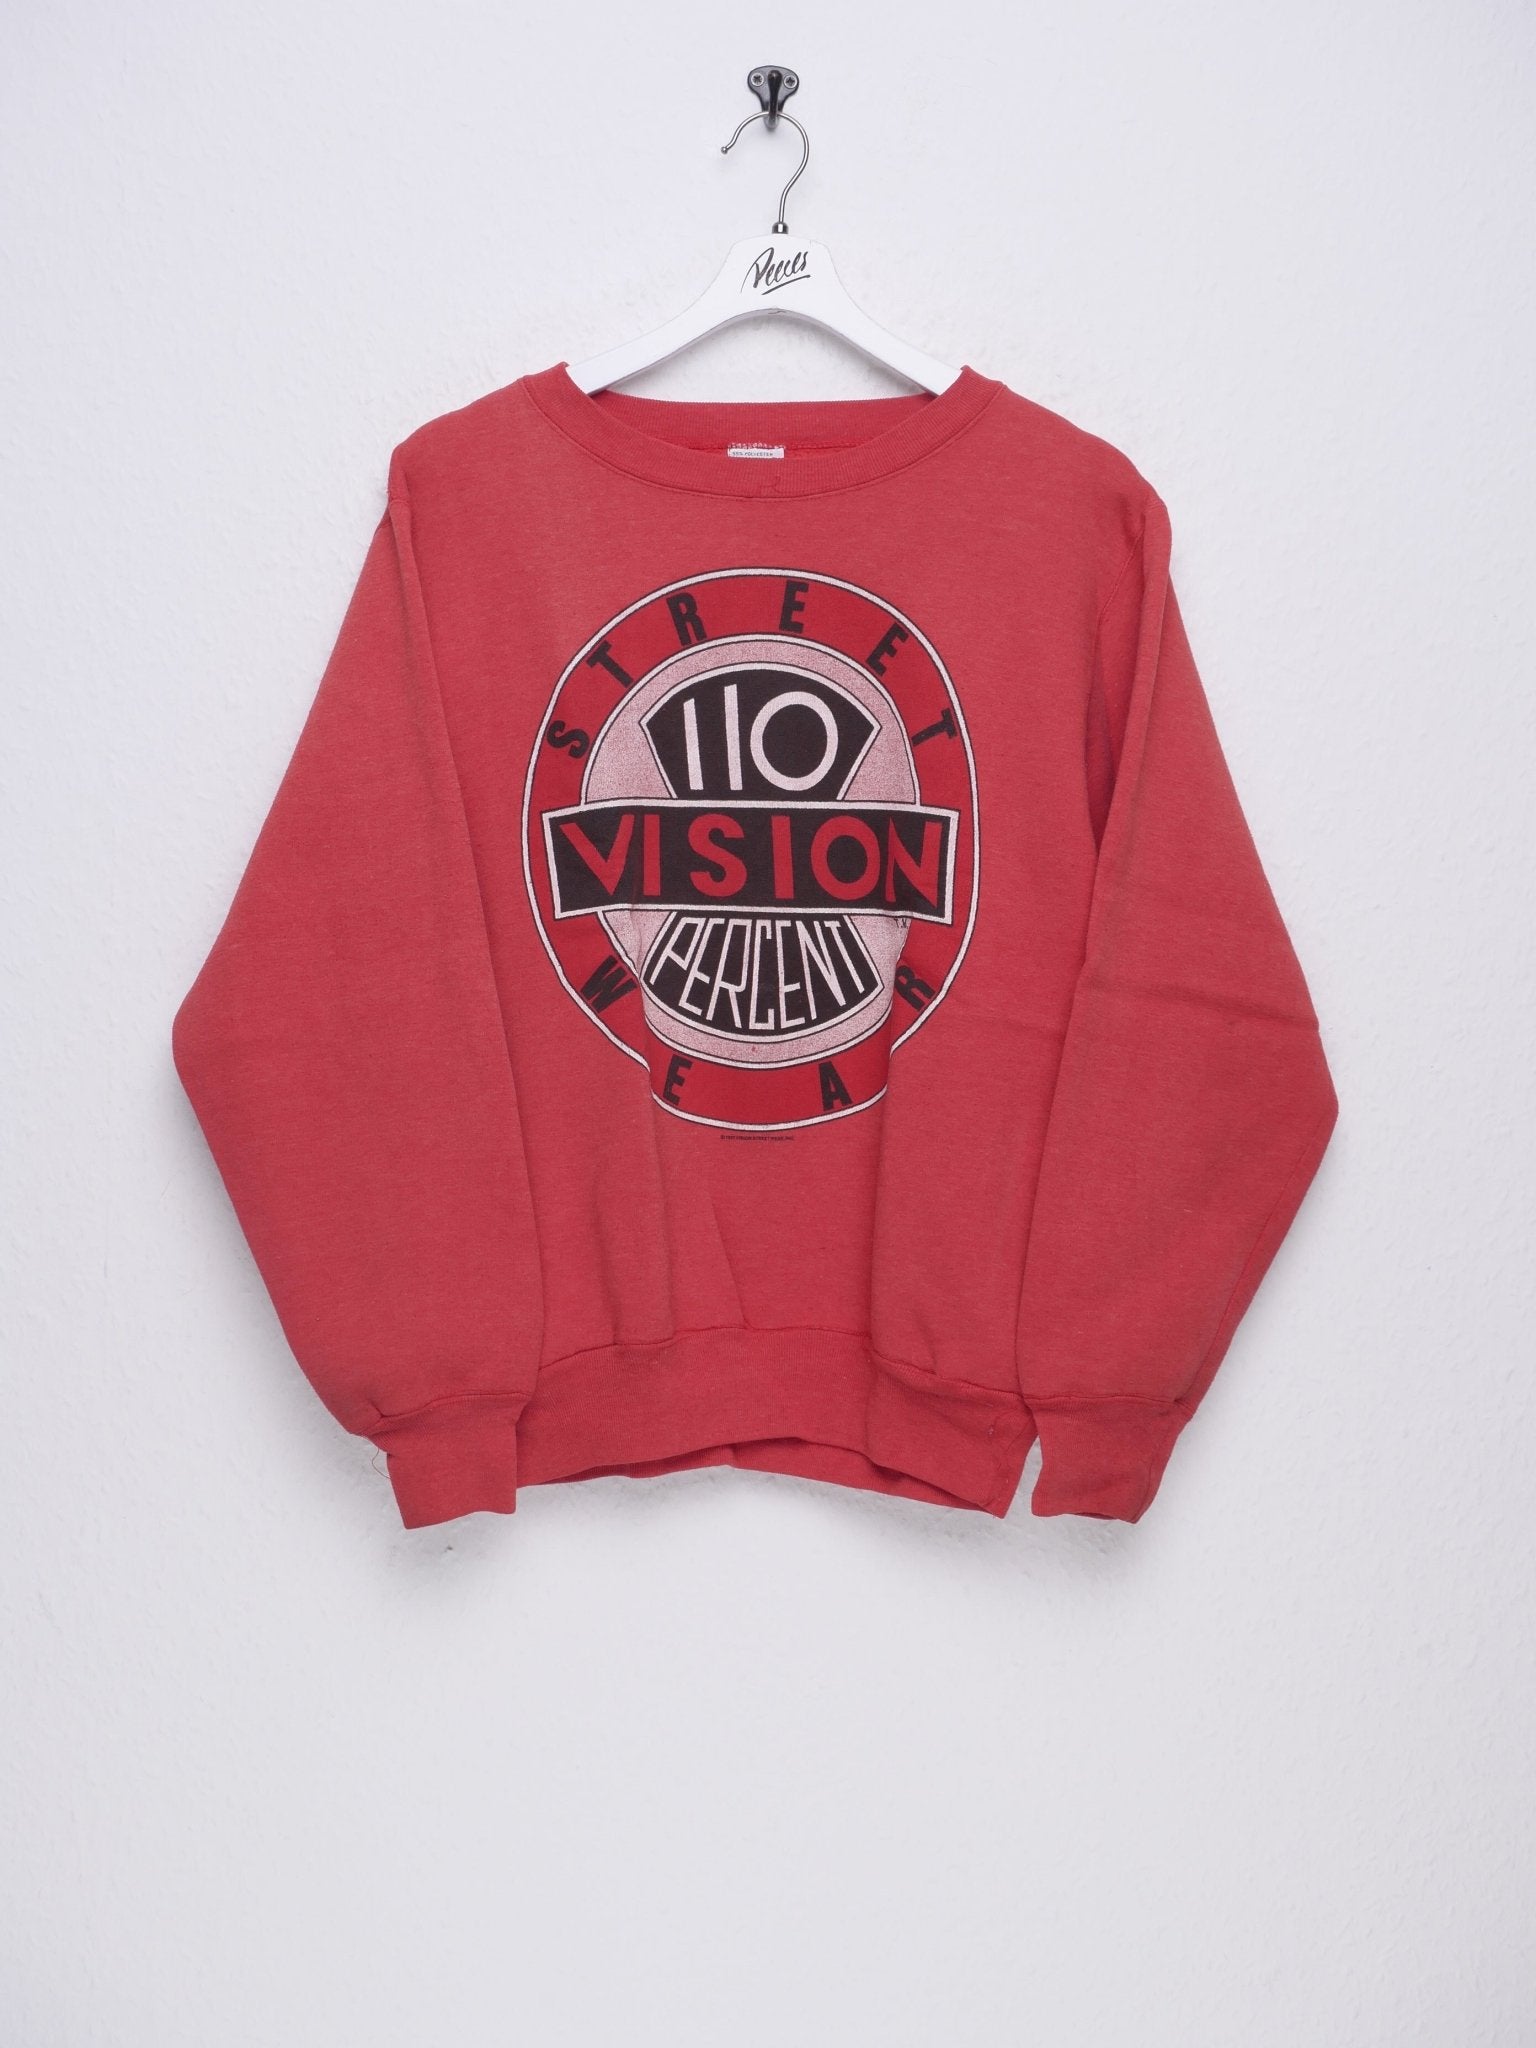 Vision 110 Percent Street Wear printed Logo 1987 Vintage Sweater - Peeces